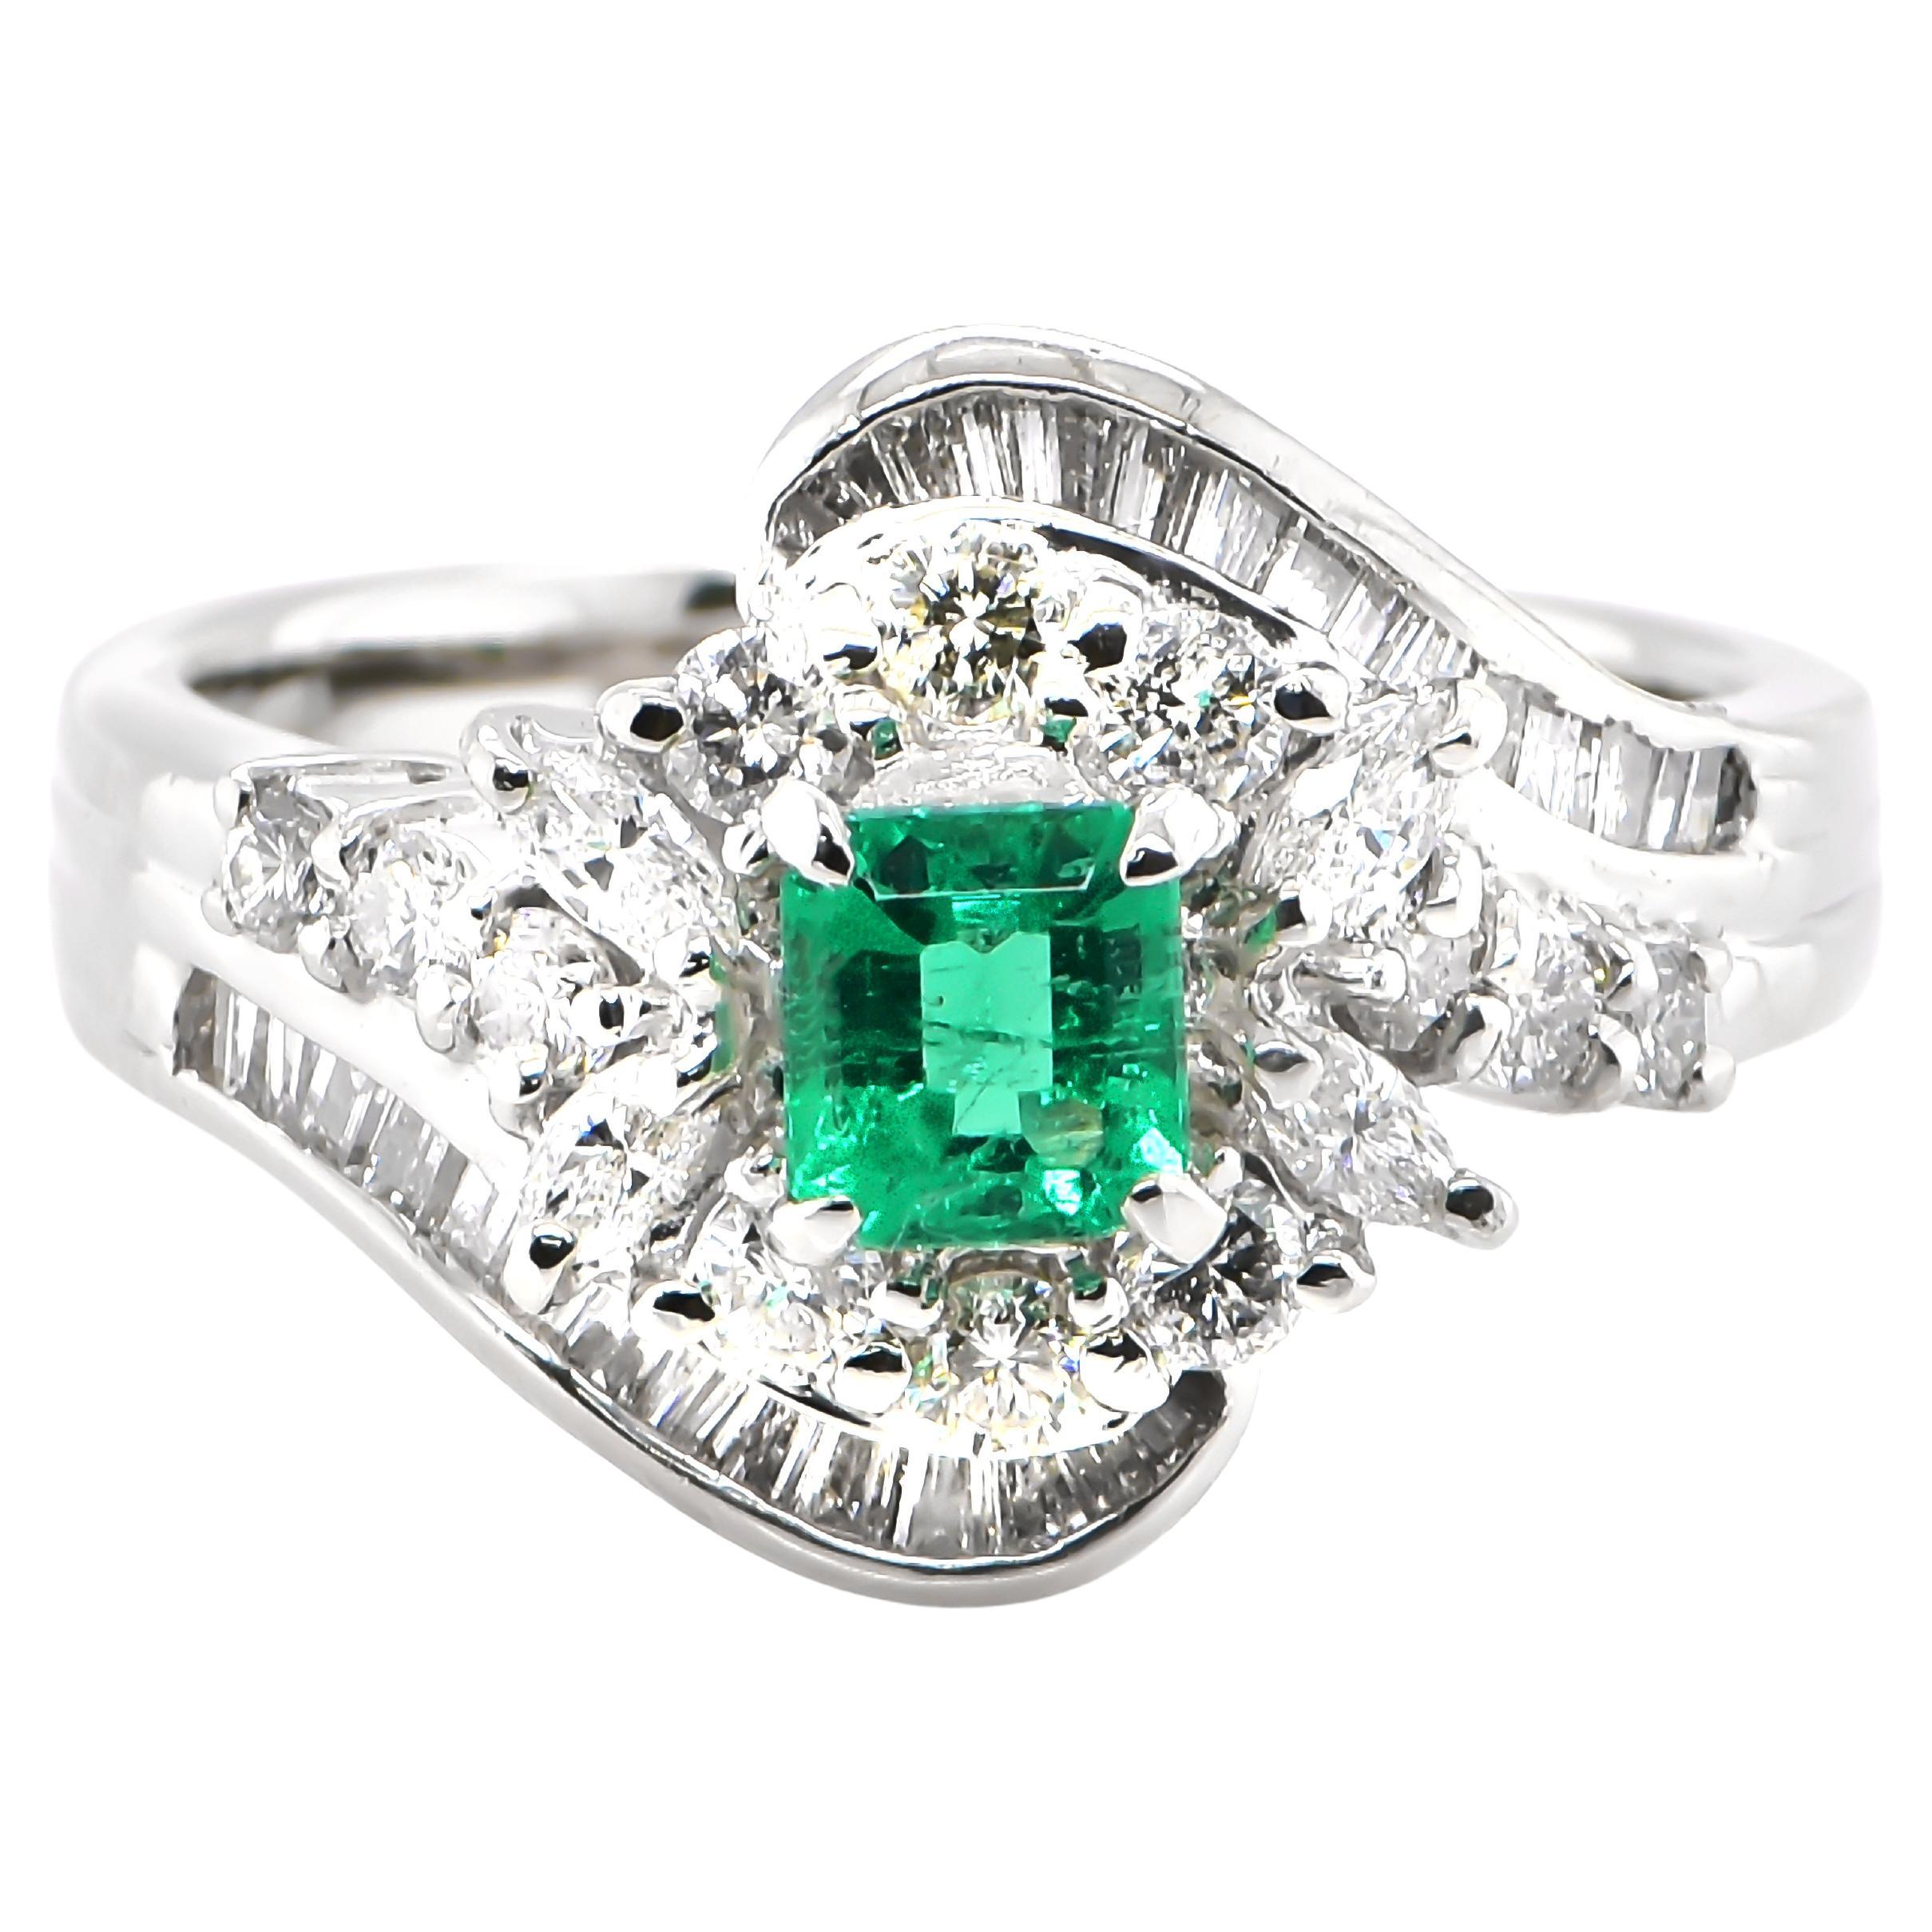 0.42 Carat Natural Vivid Green Emerald & Diamond Cocktail Ring Made in Platinum